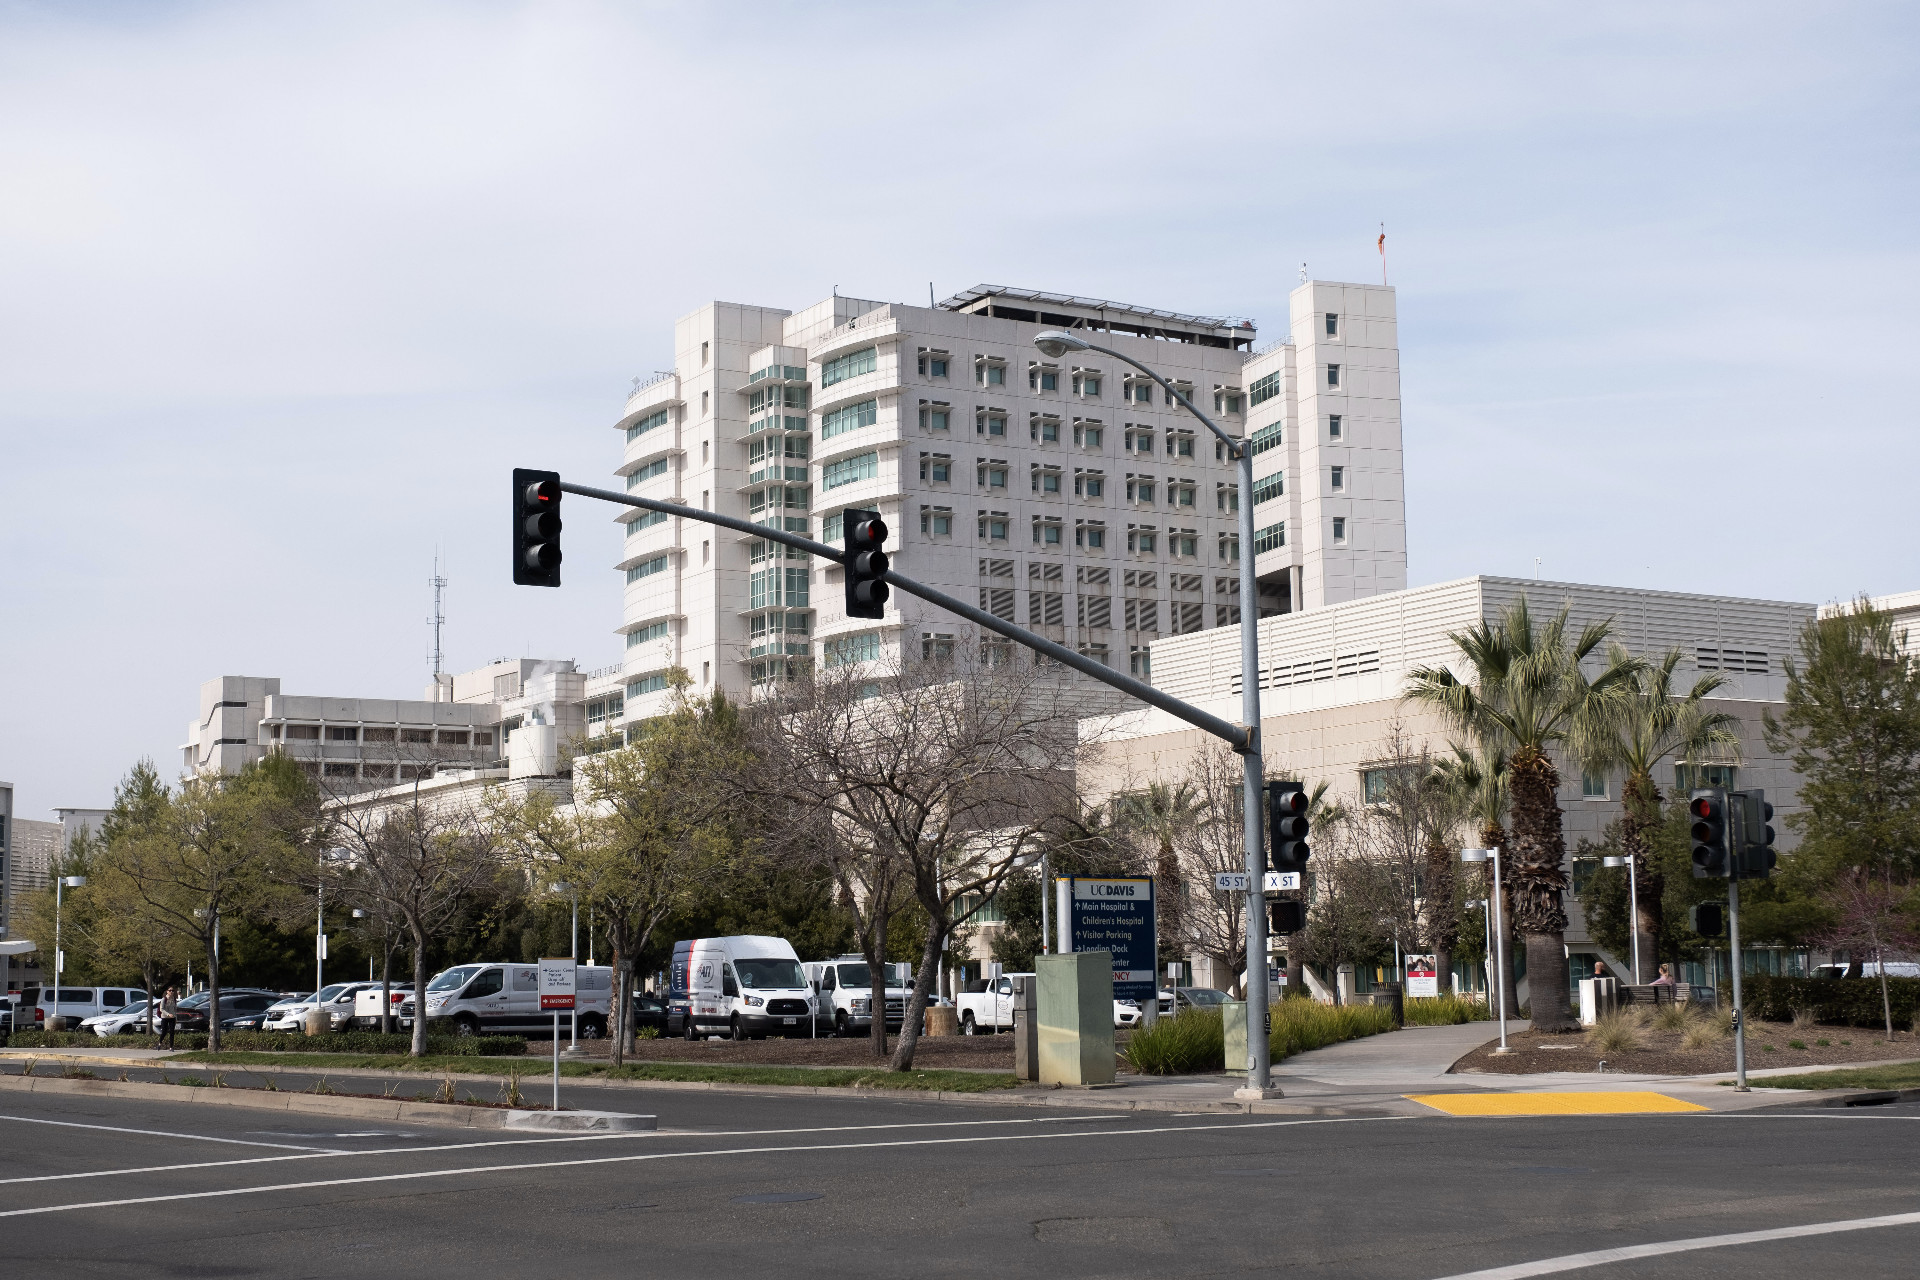 Telehealth Family Visits, UC Davis Medical Center